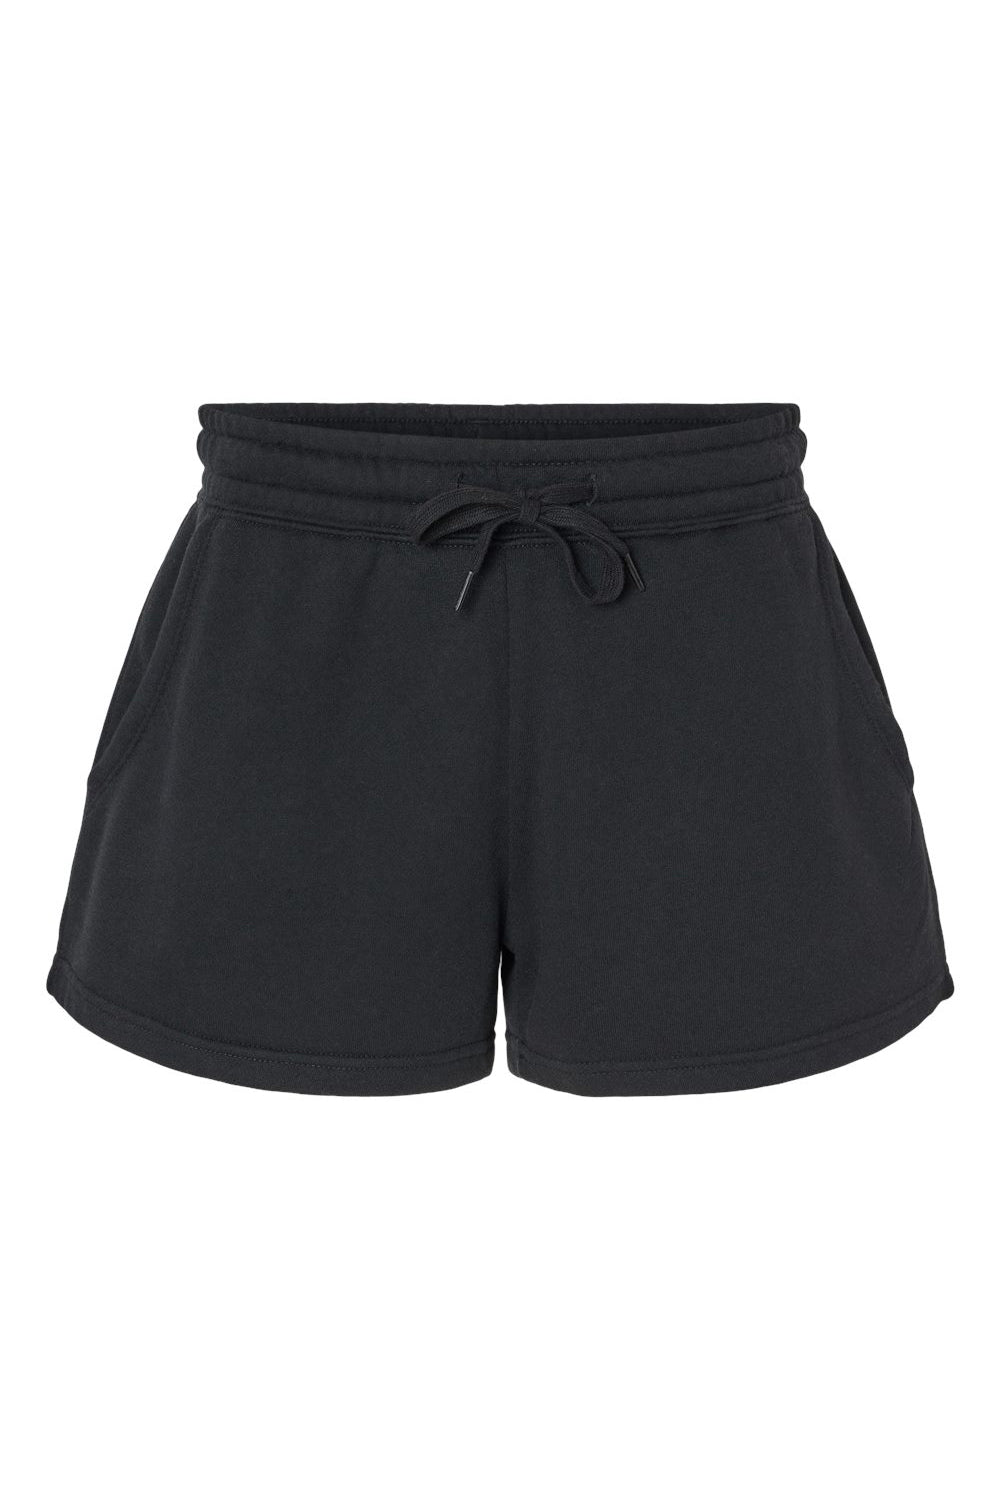 Independent Trading Co. PRM20SRT Womens California Wave Wash Fleece Shorts w/ Pockets Black Flat Front